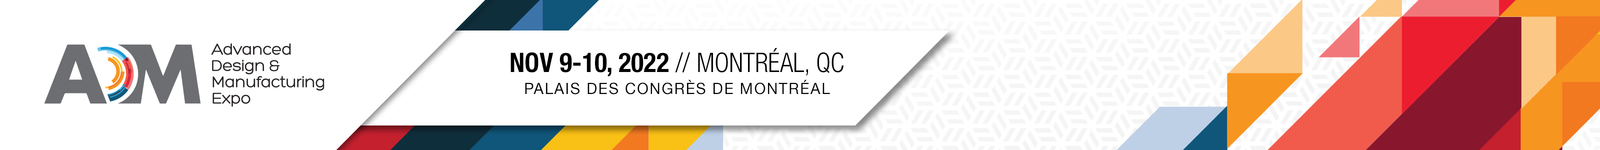 Montreal 2020 logo